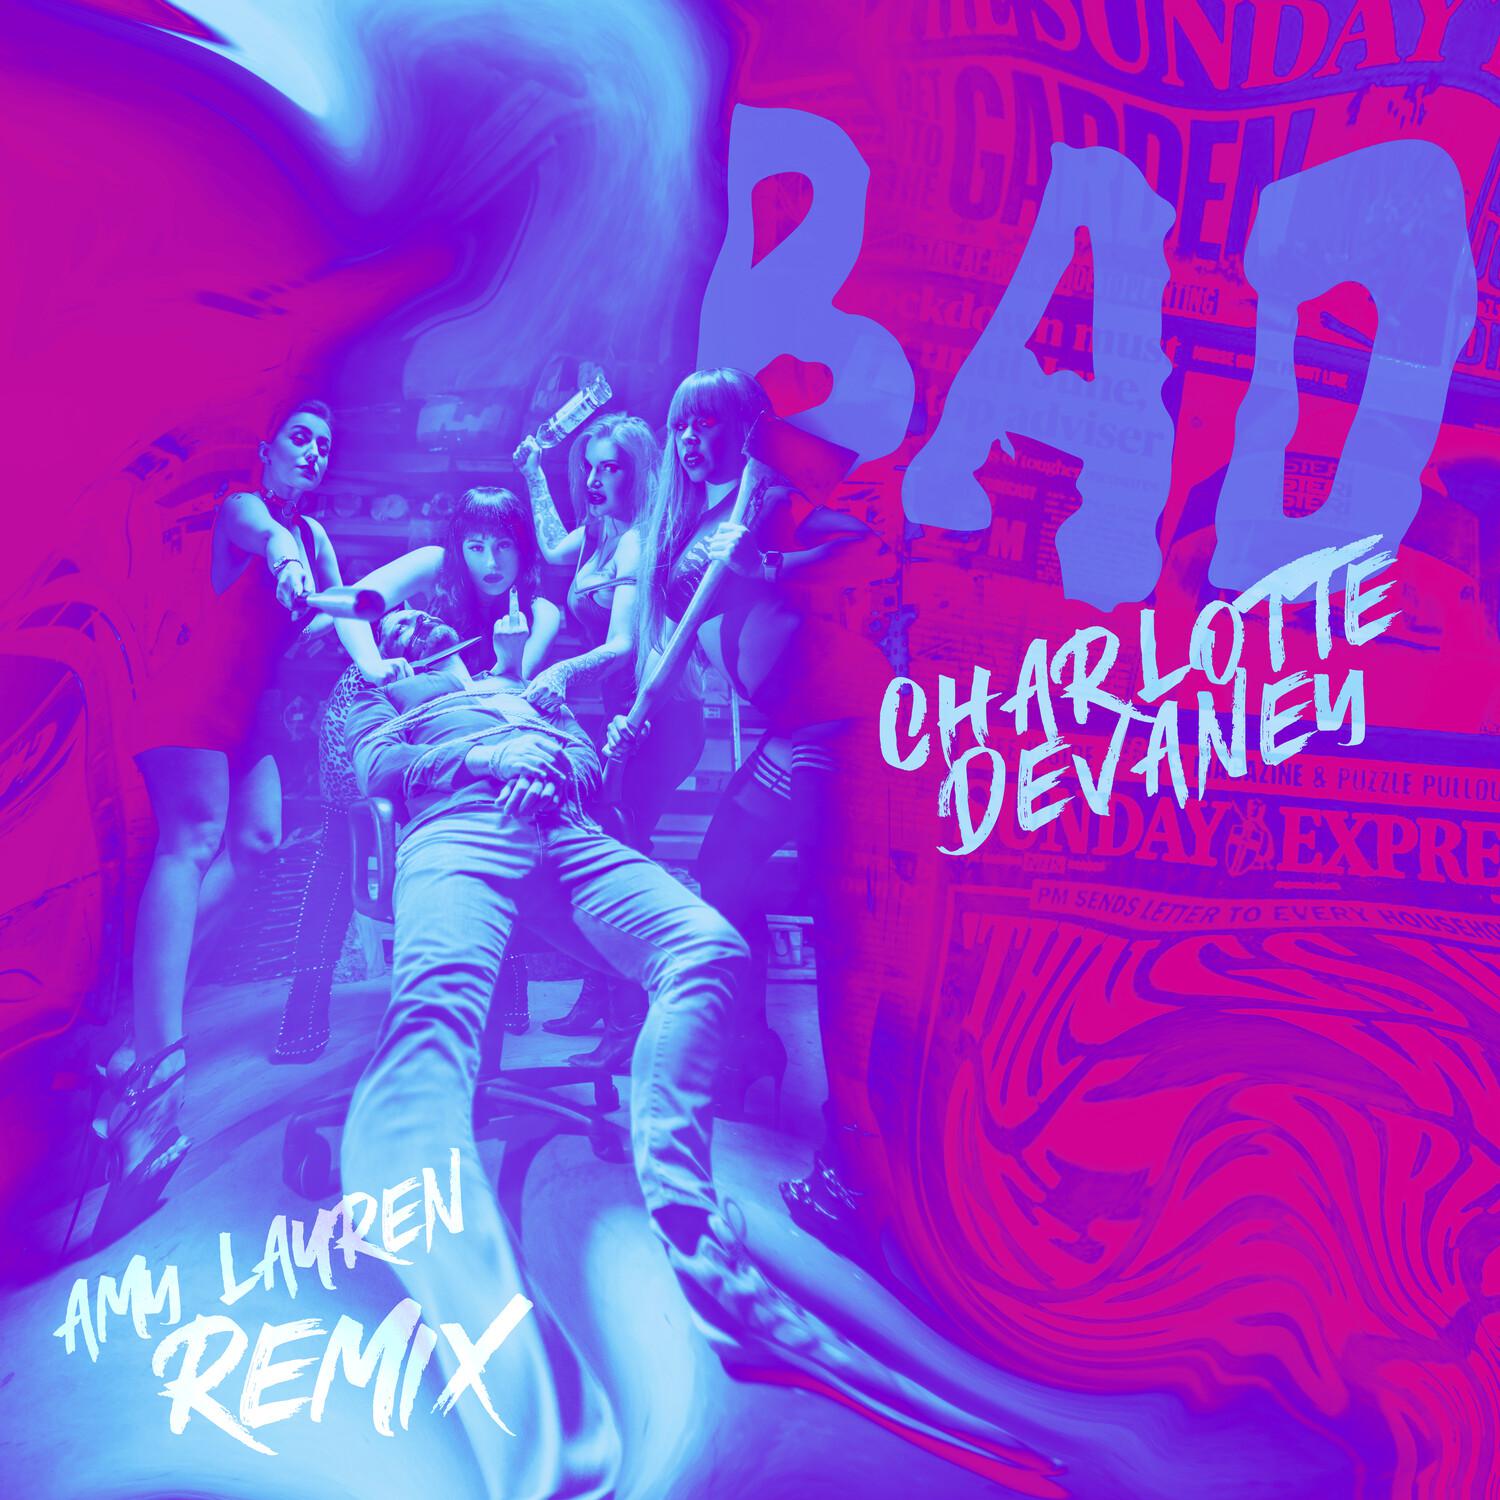 Charlotte Devaney - BAD (Amy Lauren Remix Extended)